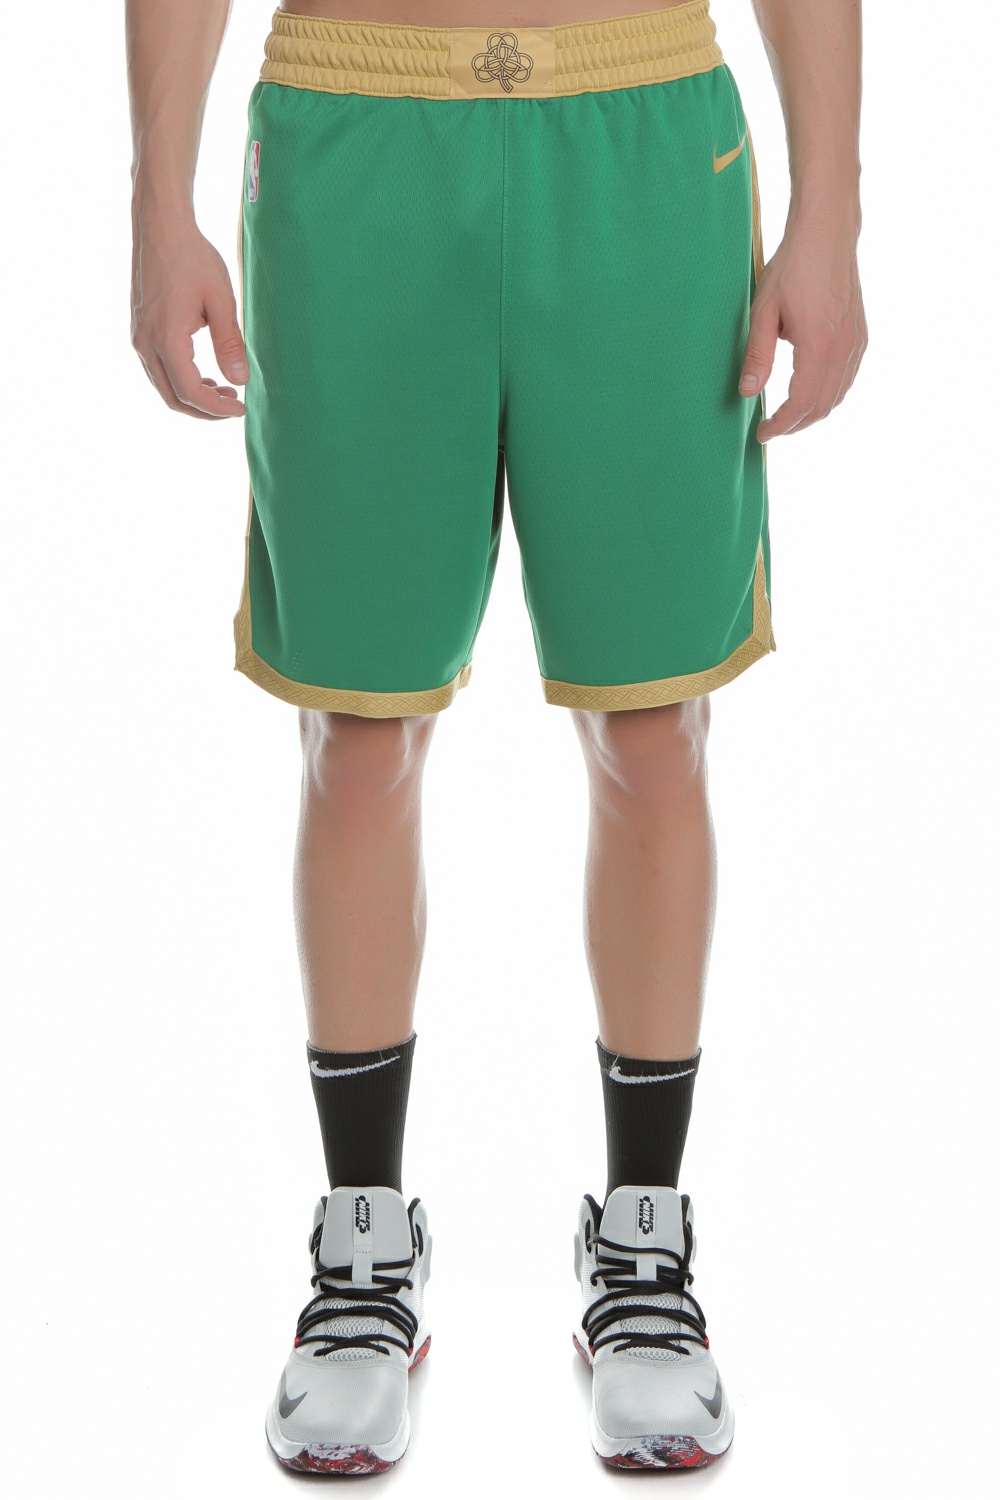 NIKE - Ανδρικό αθλητικό σορτς NIKE NBA Swingman πράσινο